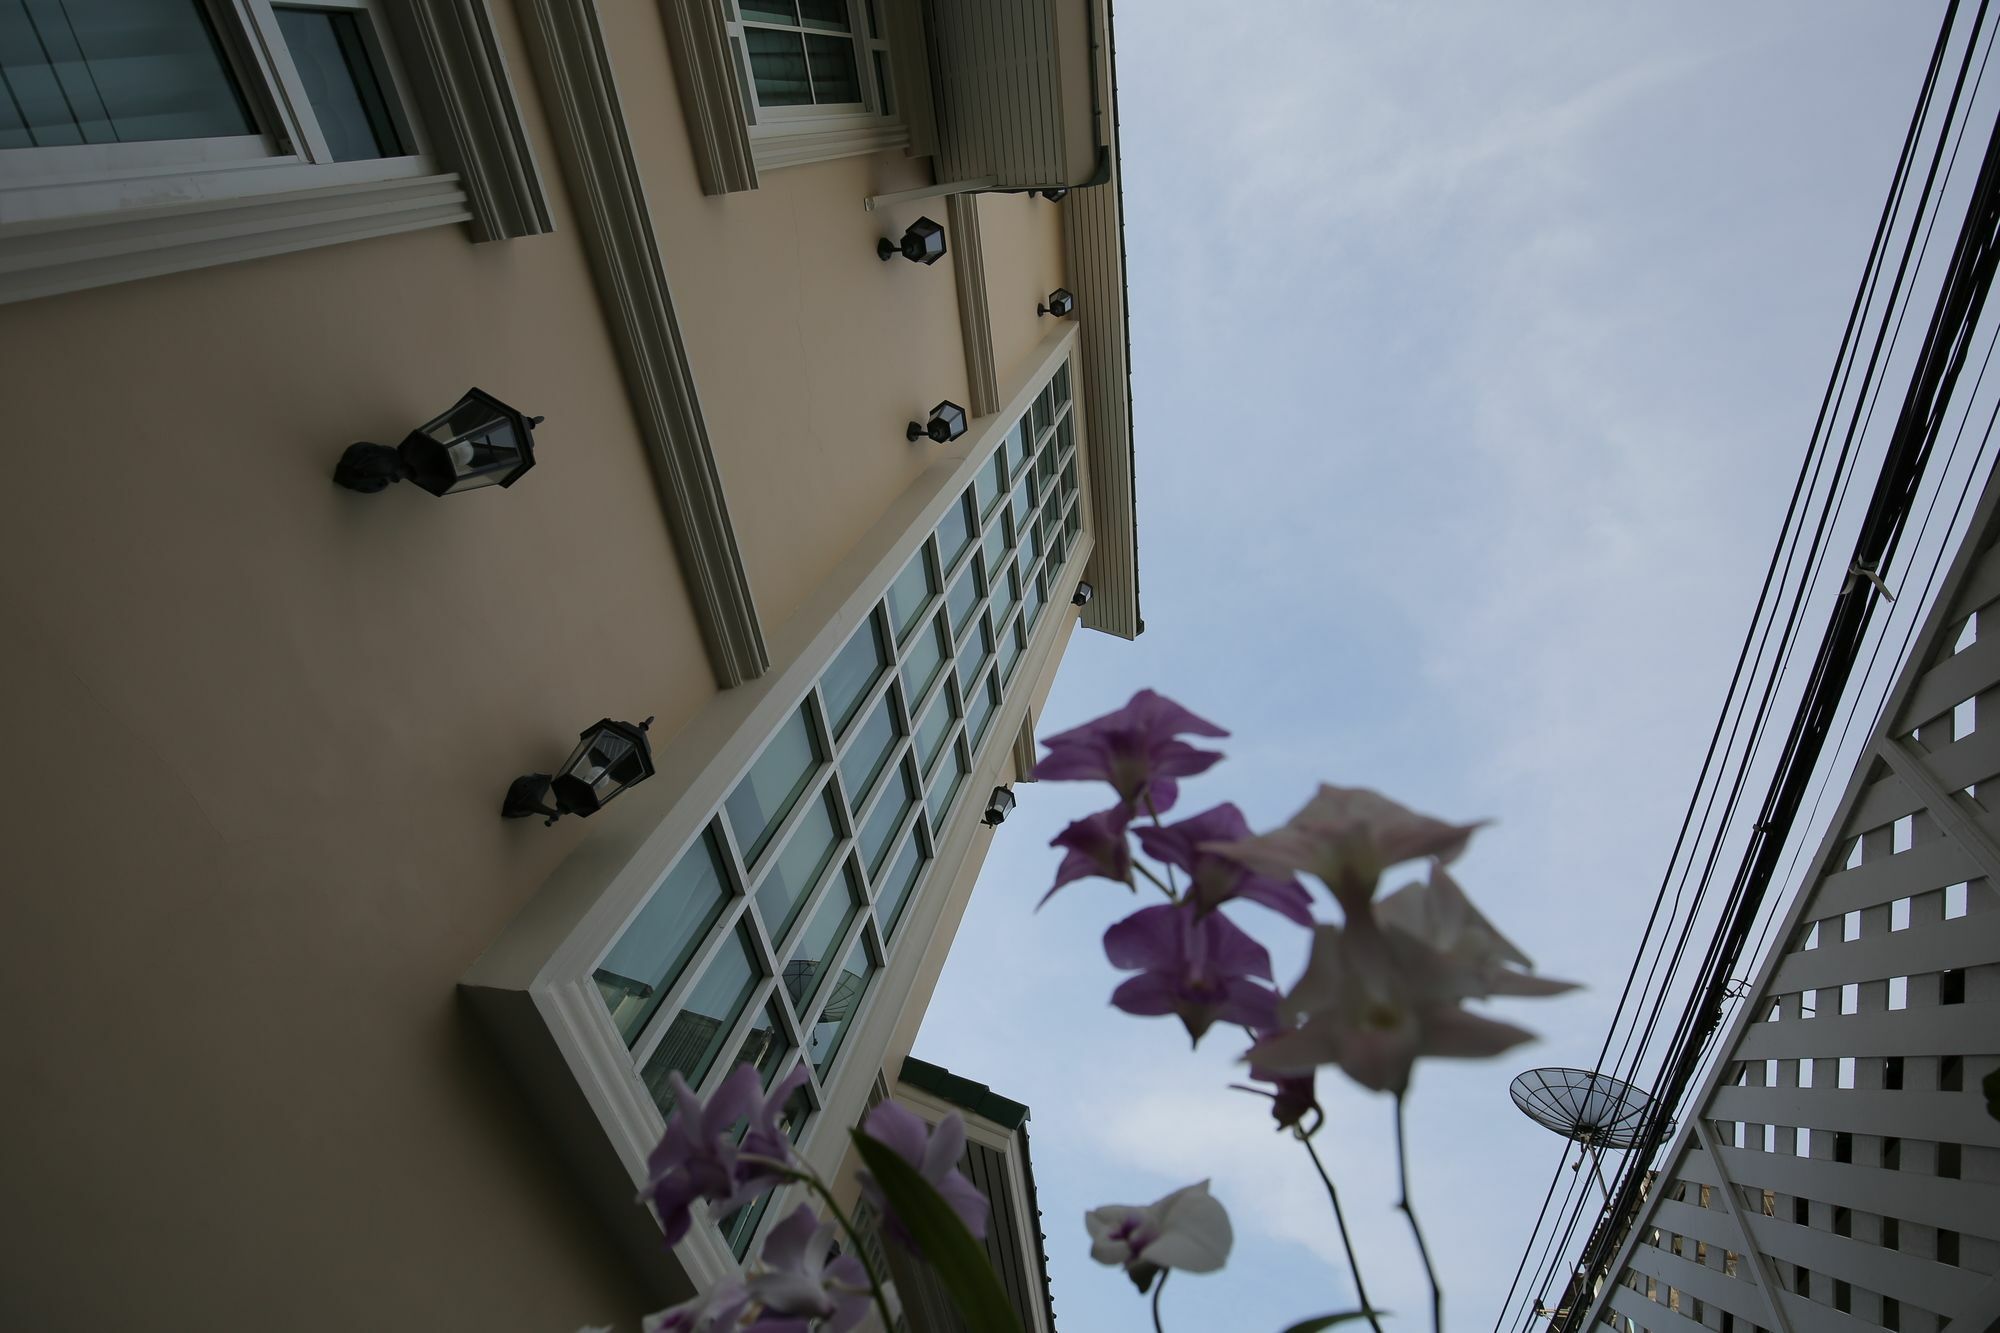 The Orchid House 153 Hotel Bangkok Bagian luar foto